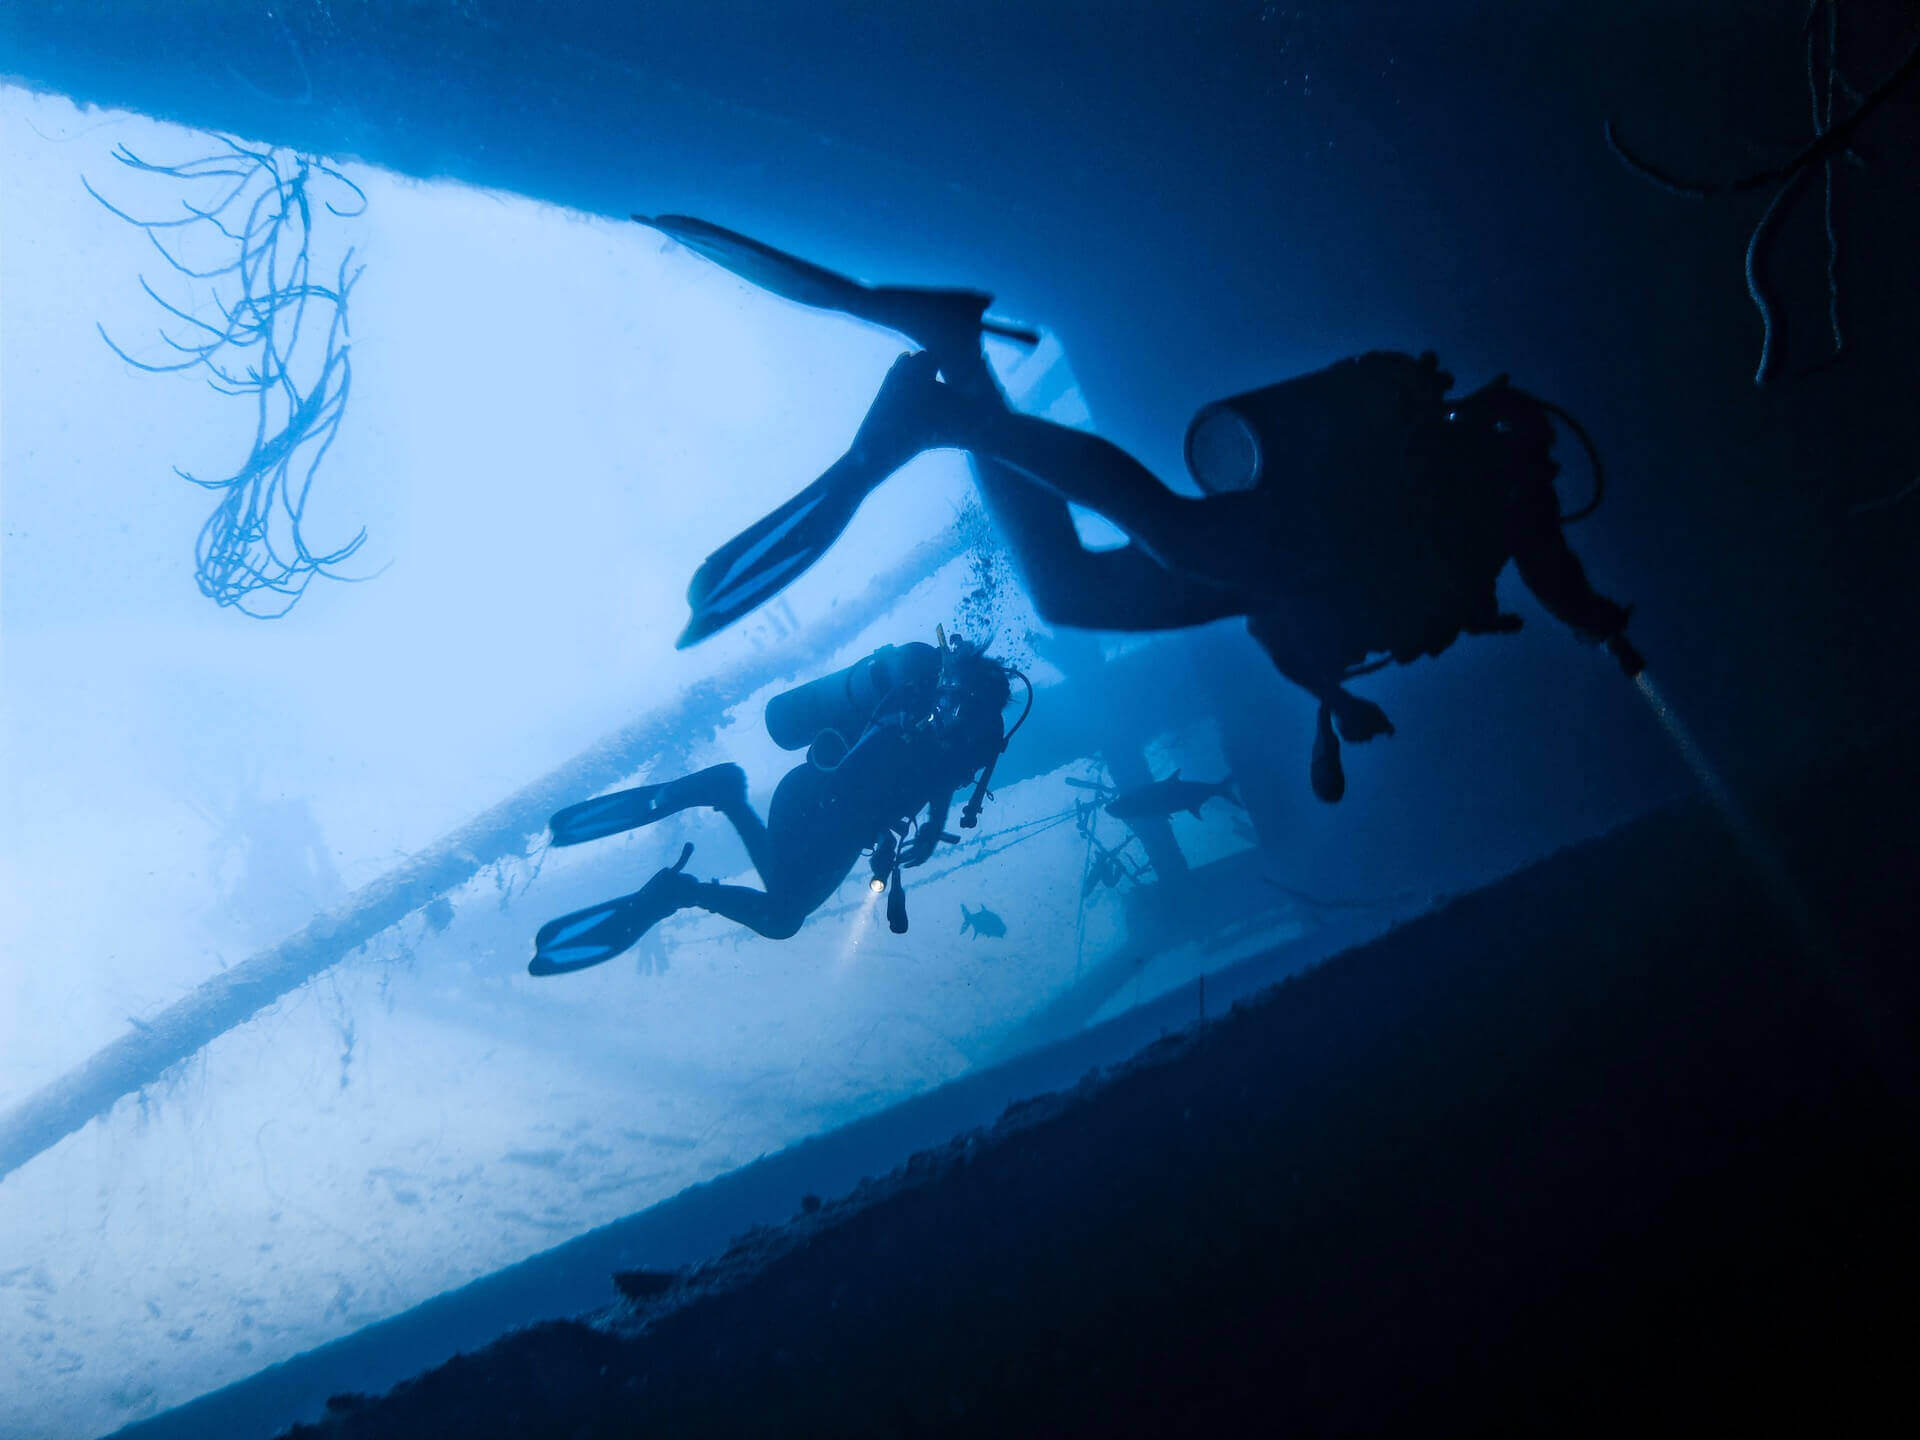 Scuba divers close to a shipwreck